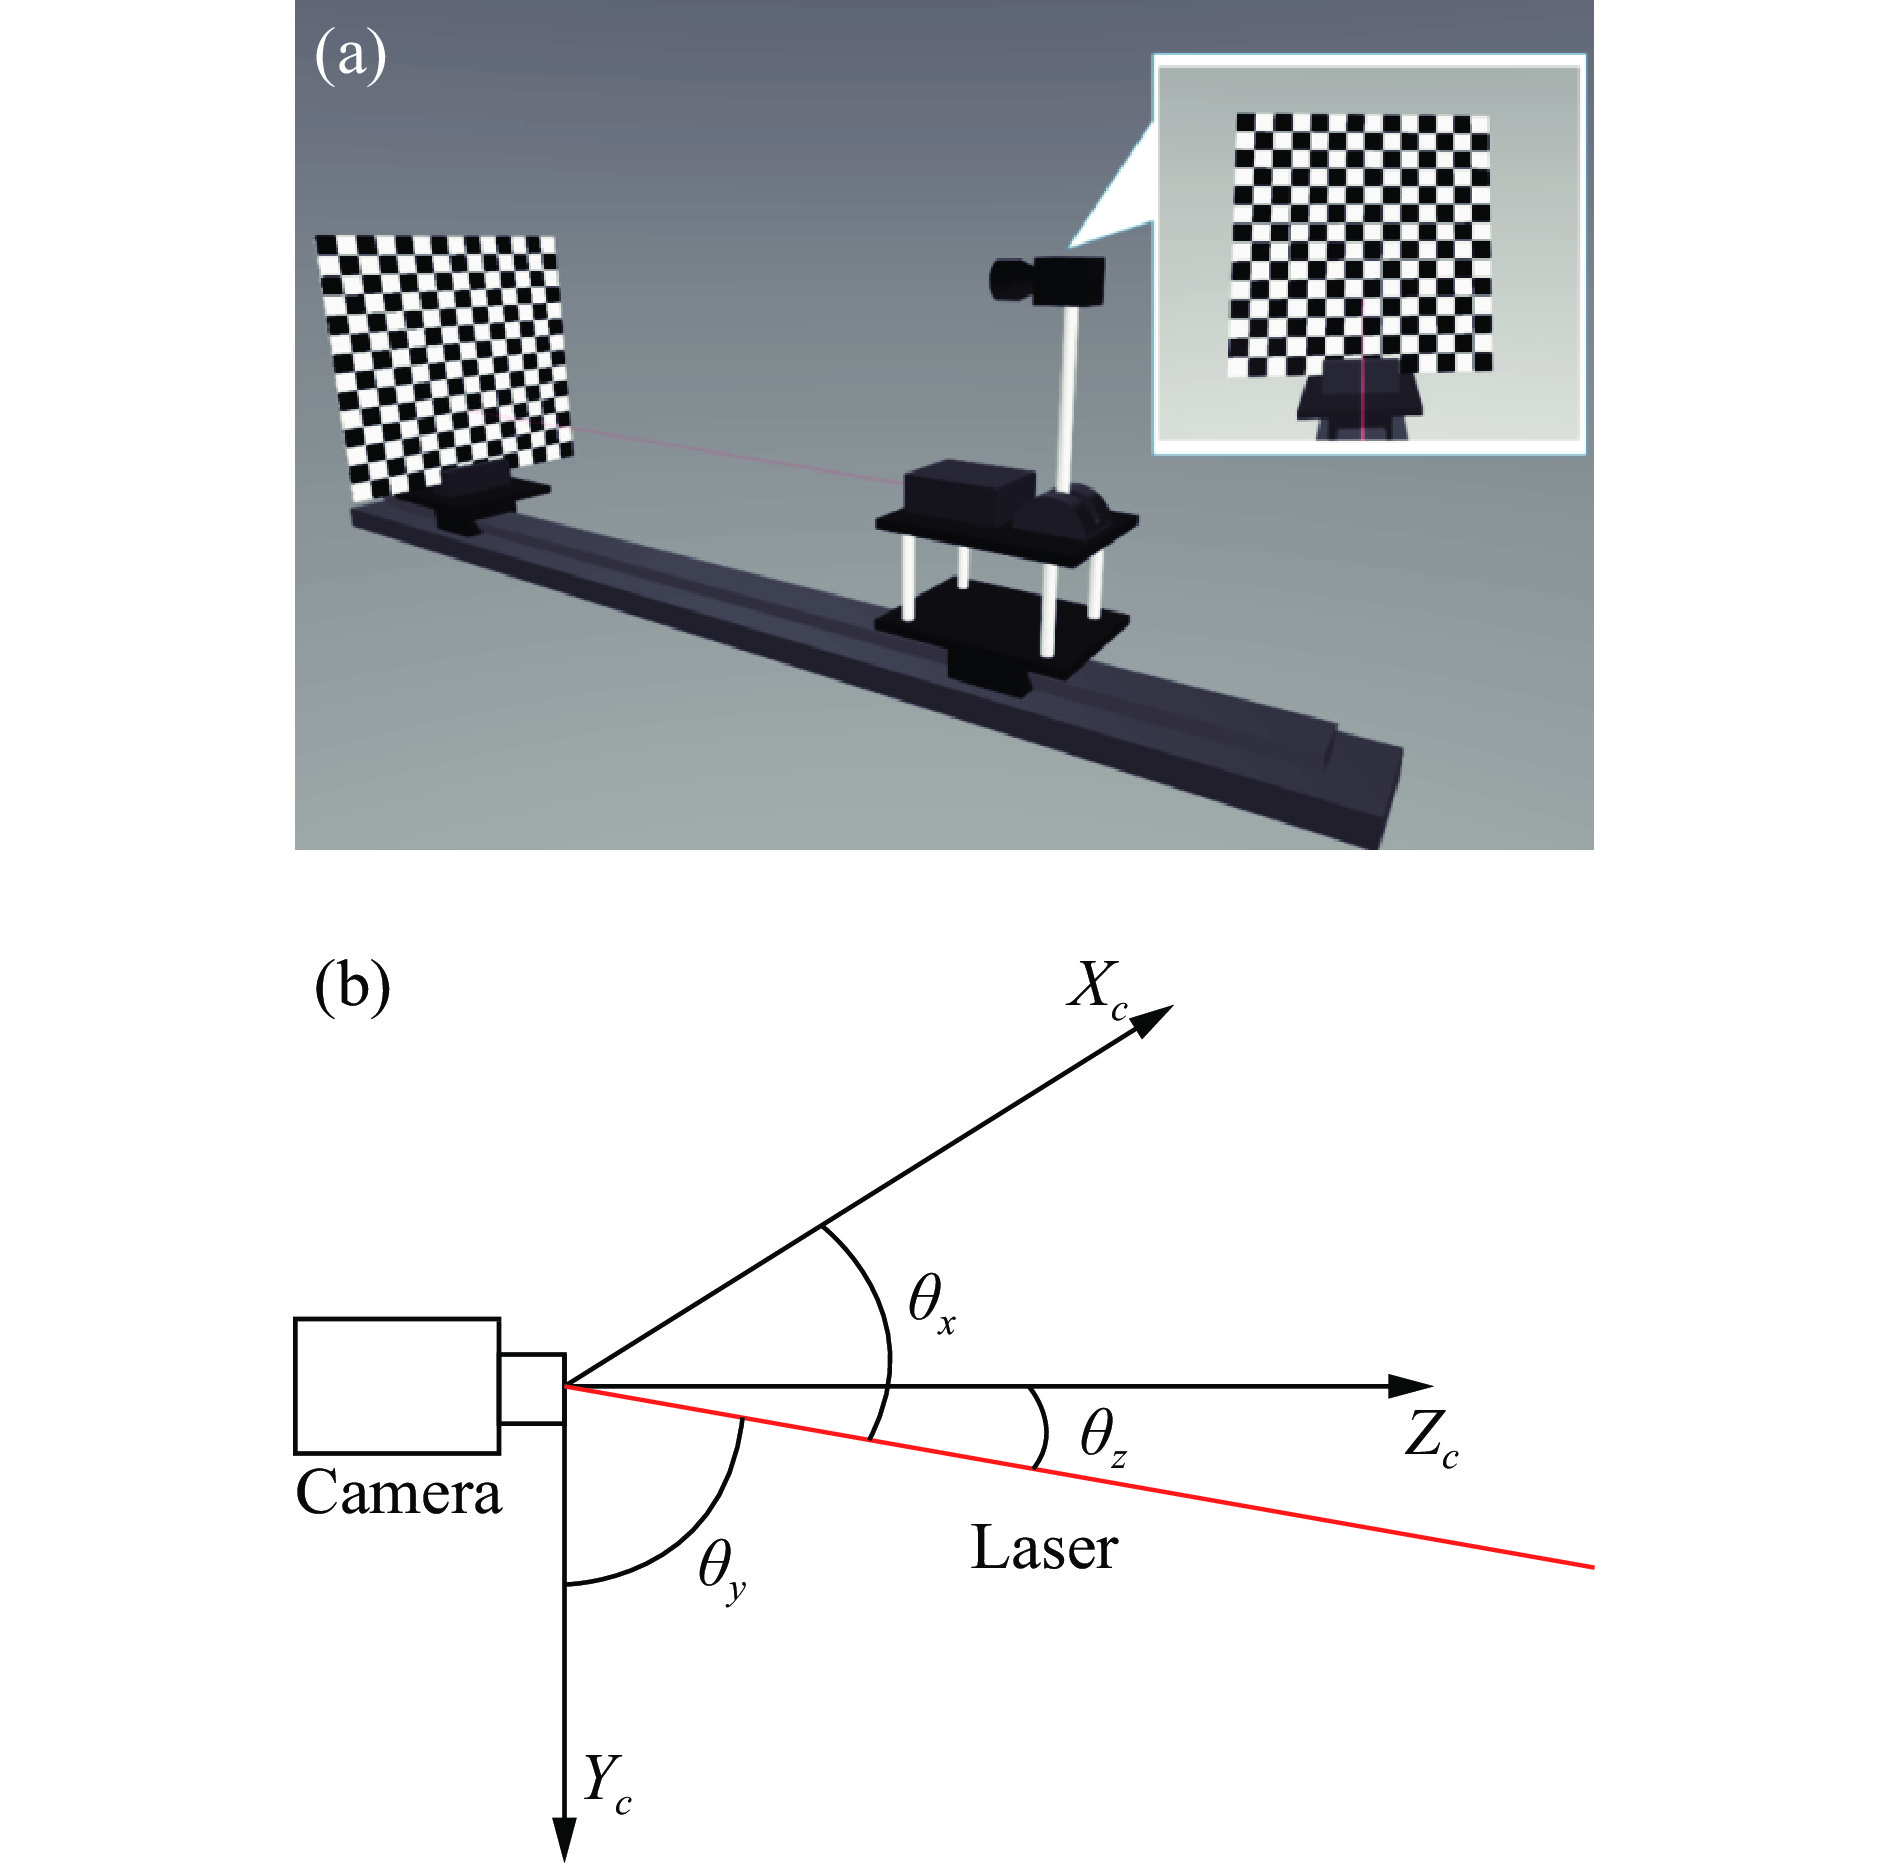 (a) Laser range finder and camera calibration diagram, (b) Angle between laser and camera axes